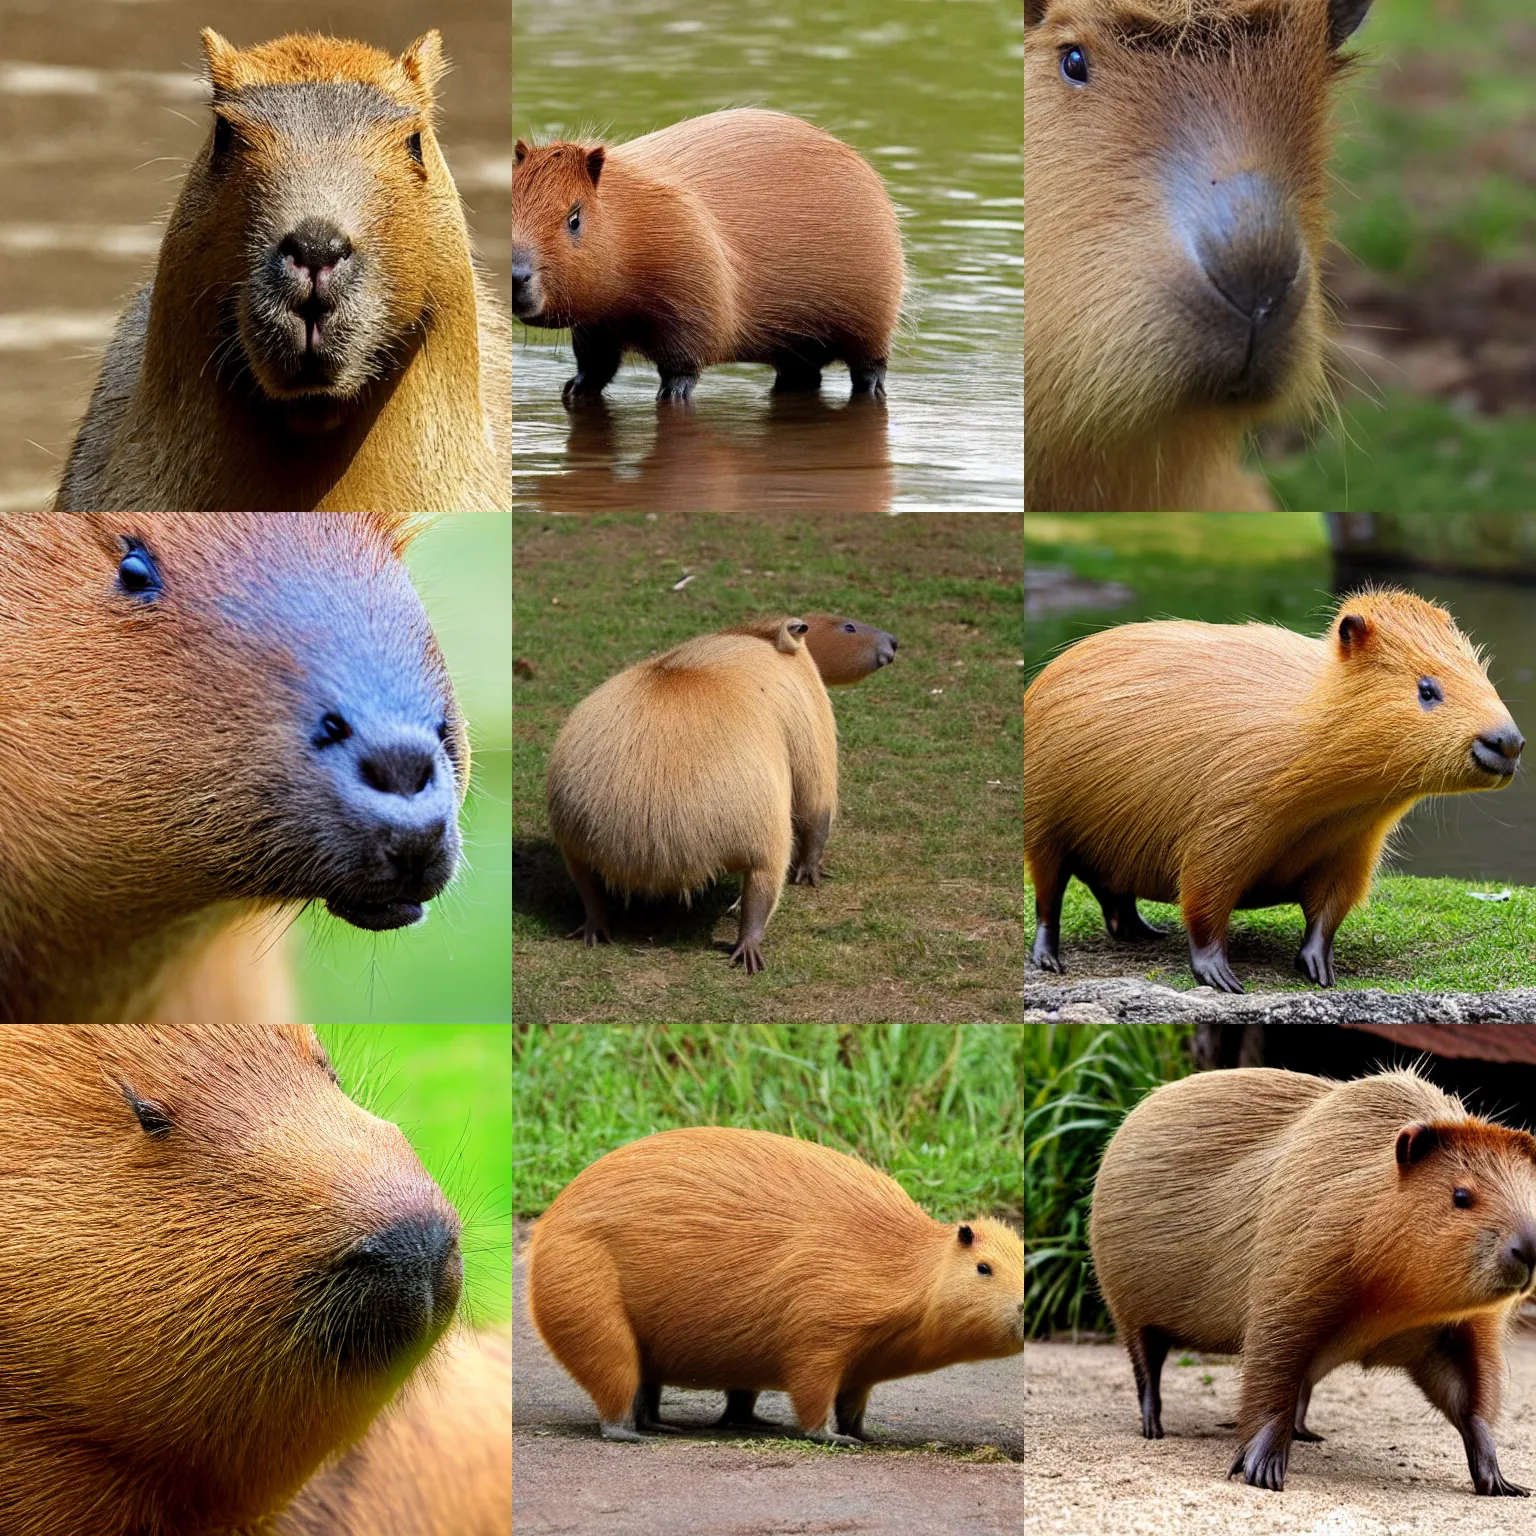 capybara3_4family_3yuさん4-29-10